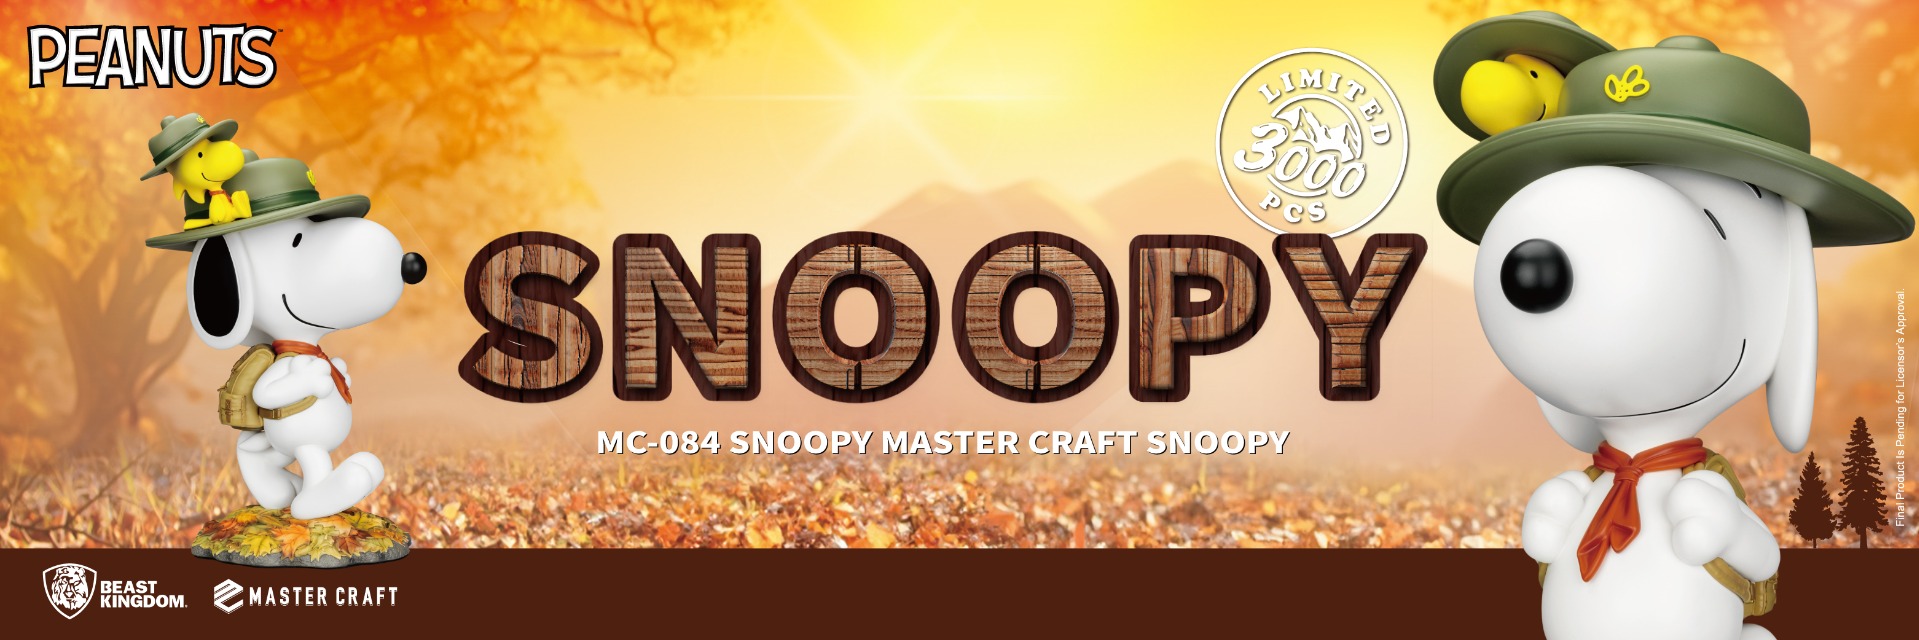 MC-084 Snoopy Master Craft Snoopy